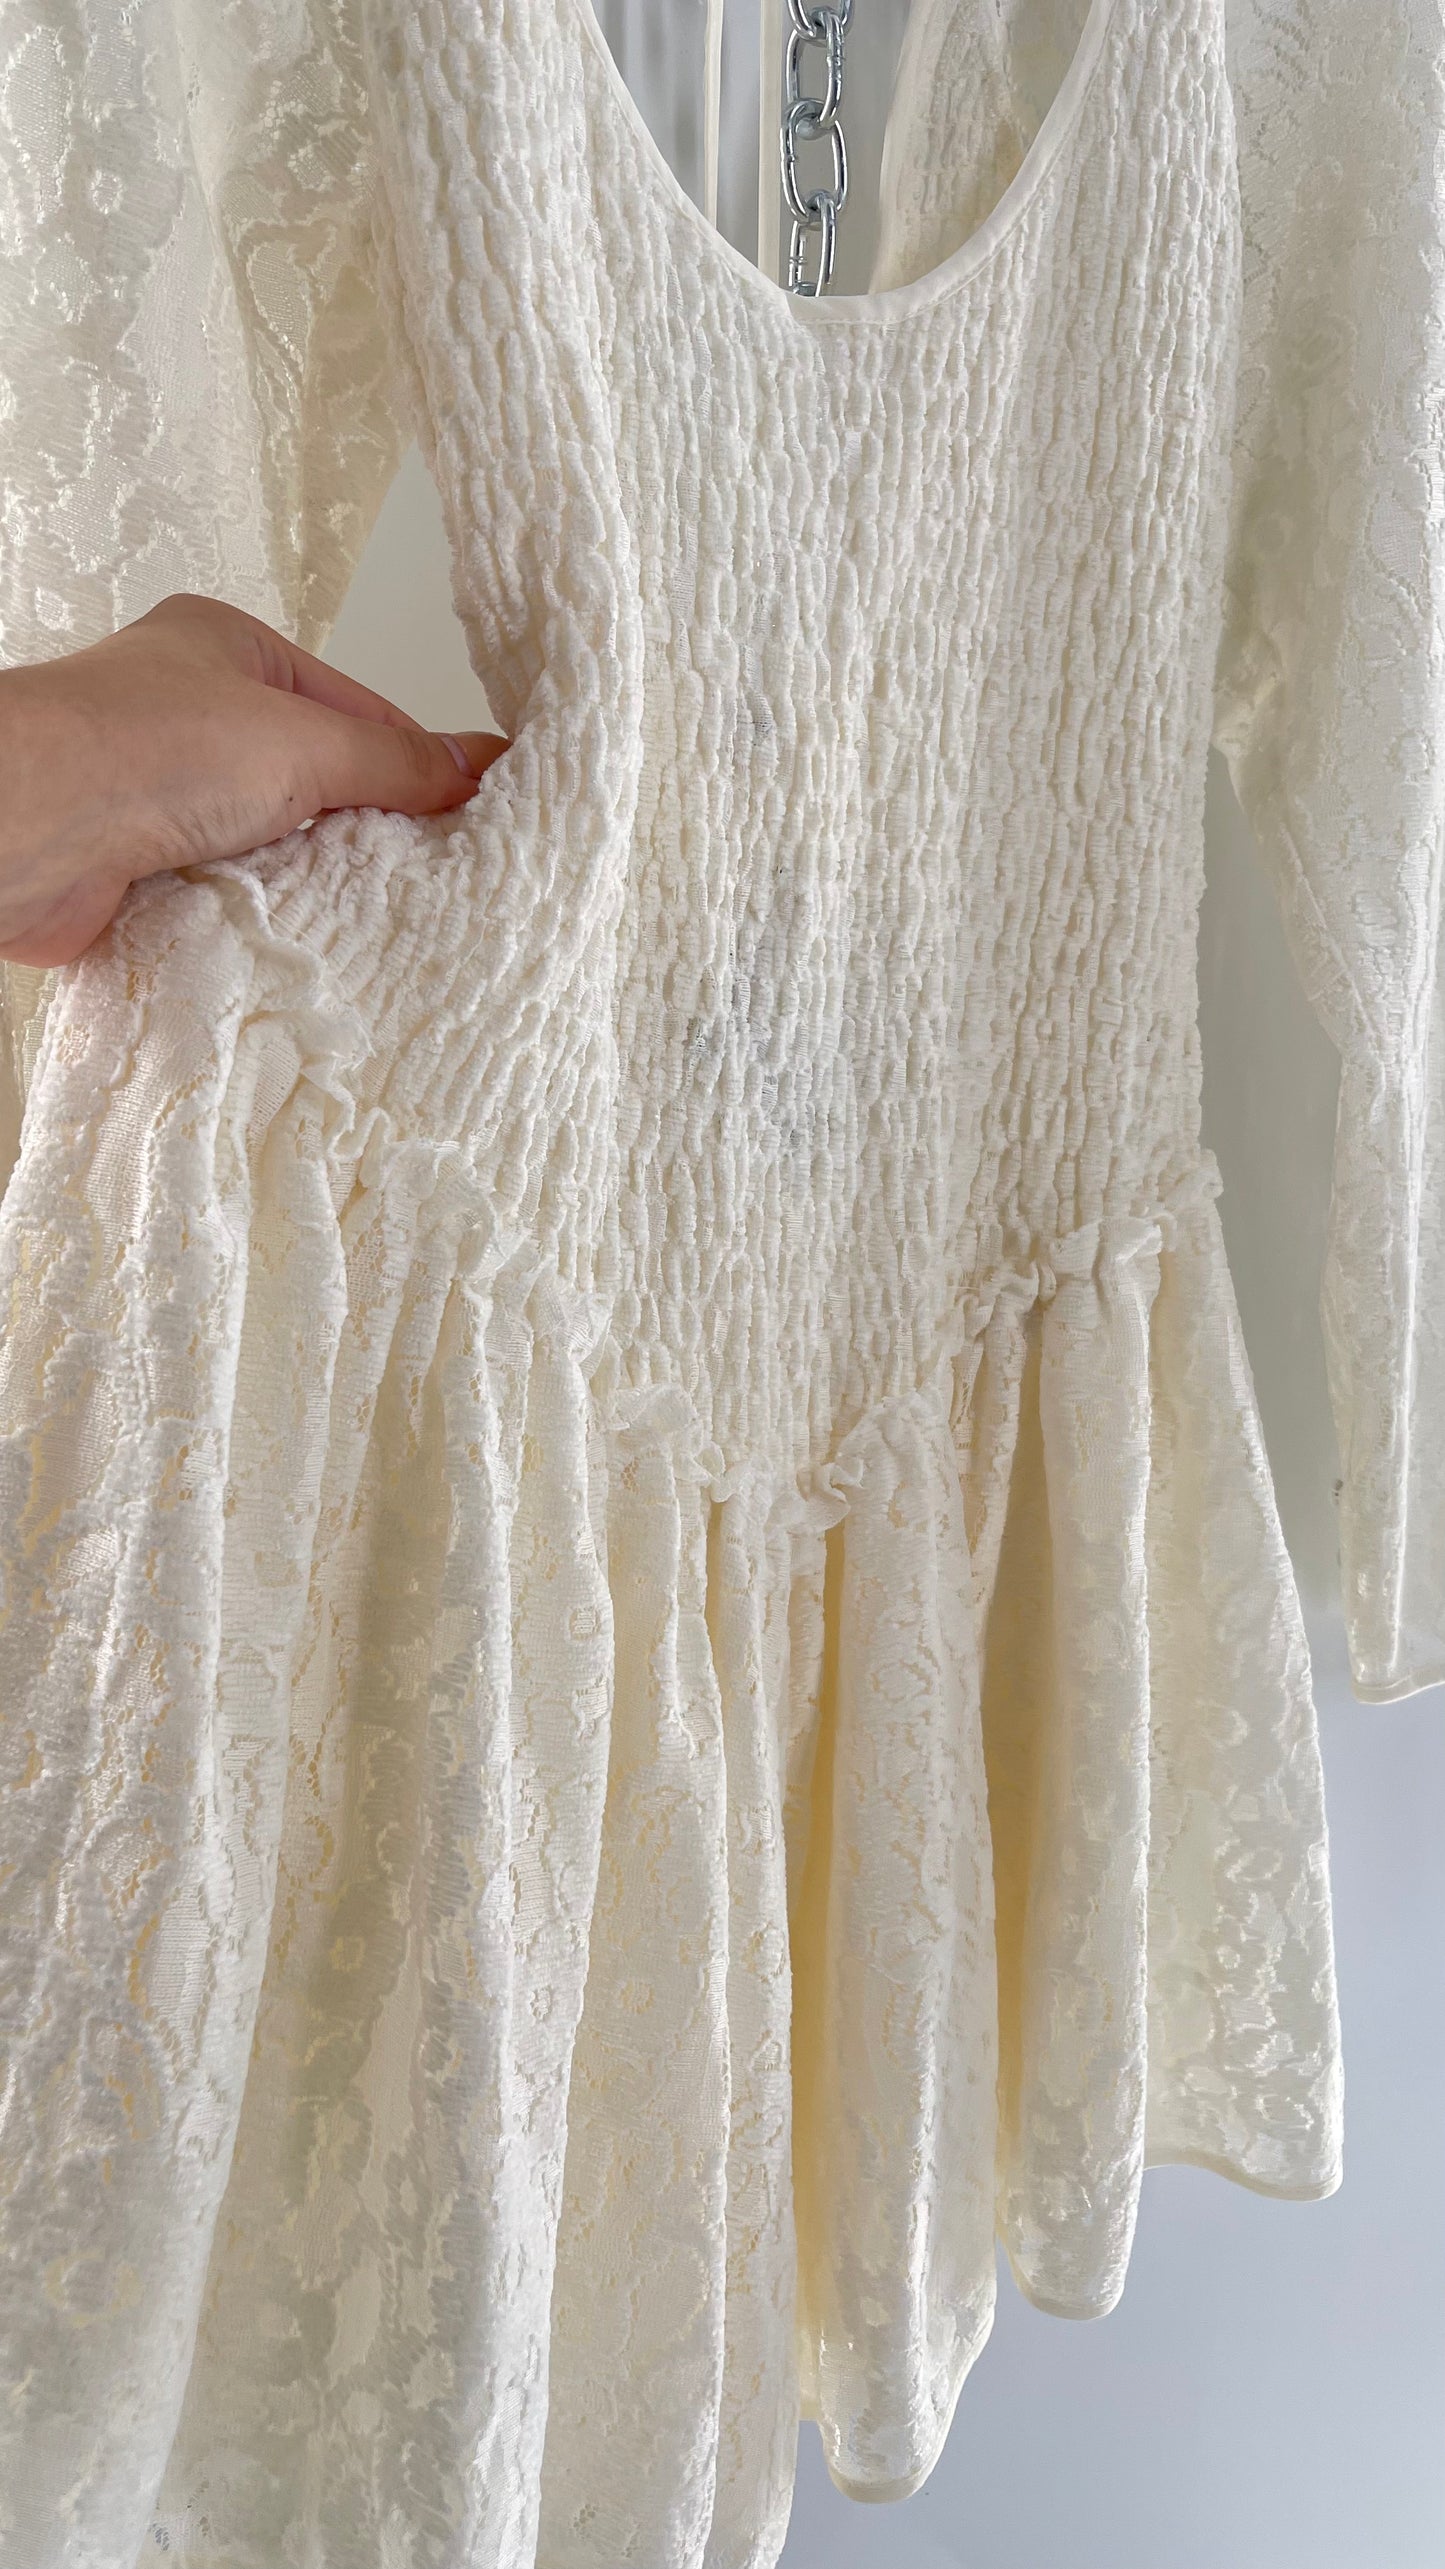 Free People White Velvet Lace Dress with Smocked Bodice and Pointed Waistline (Medium)